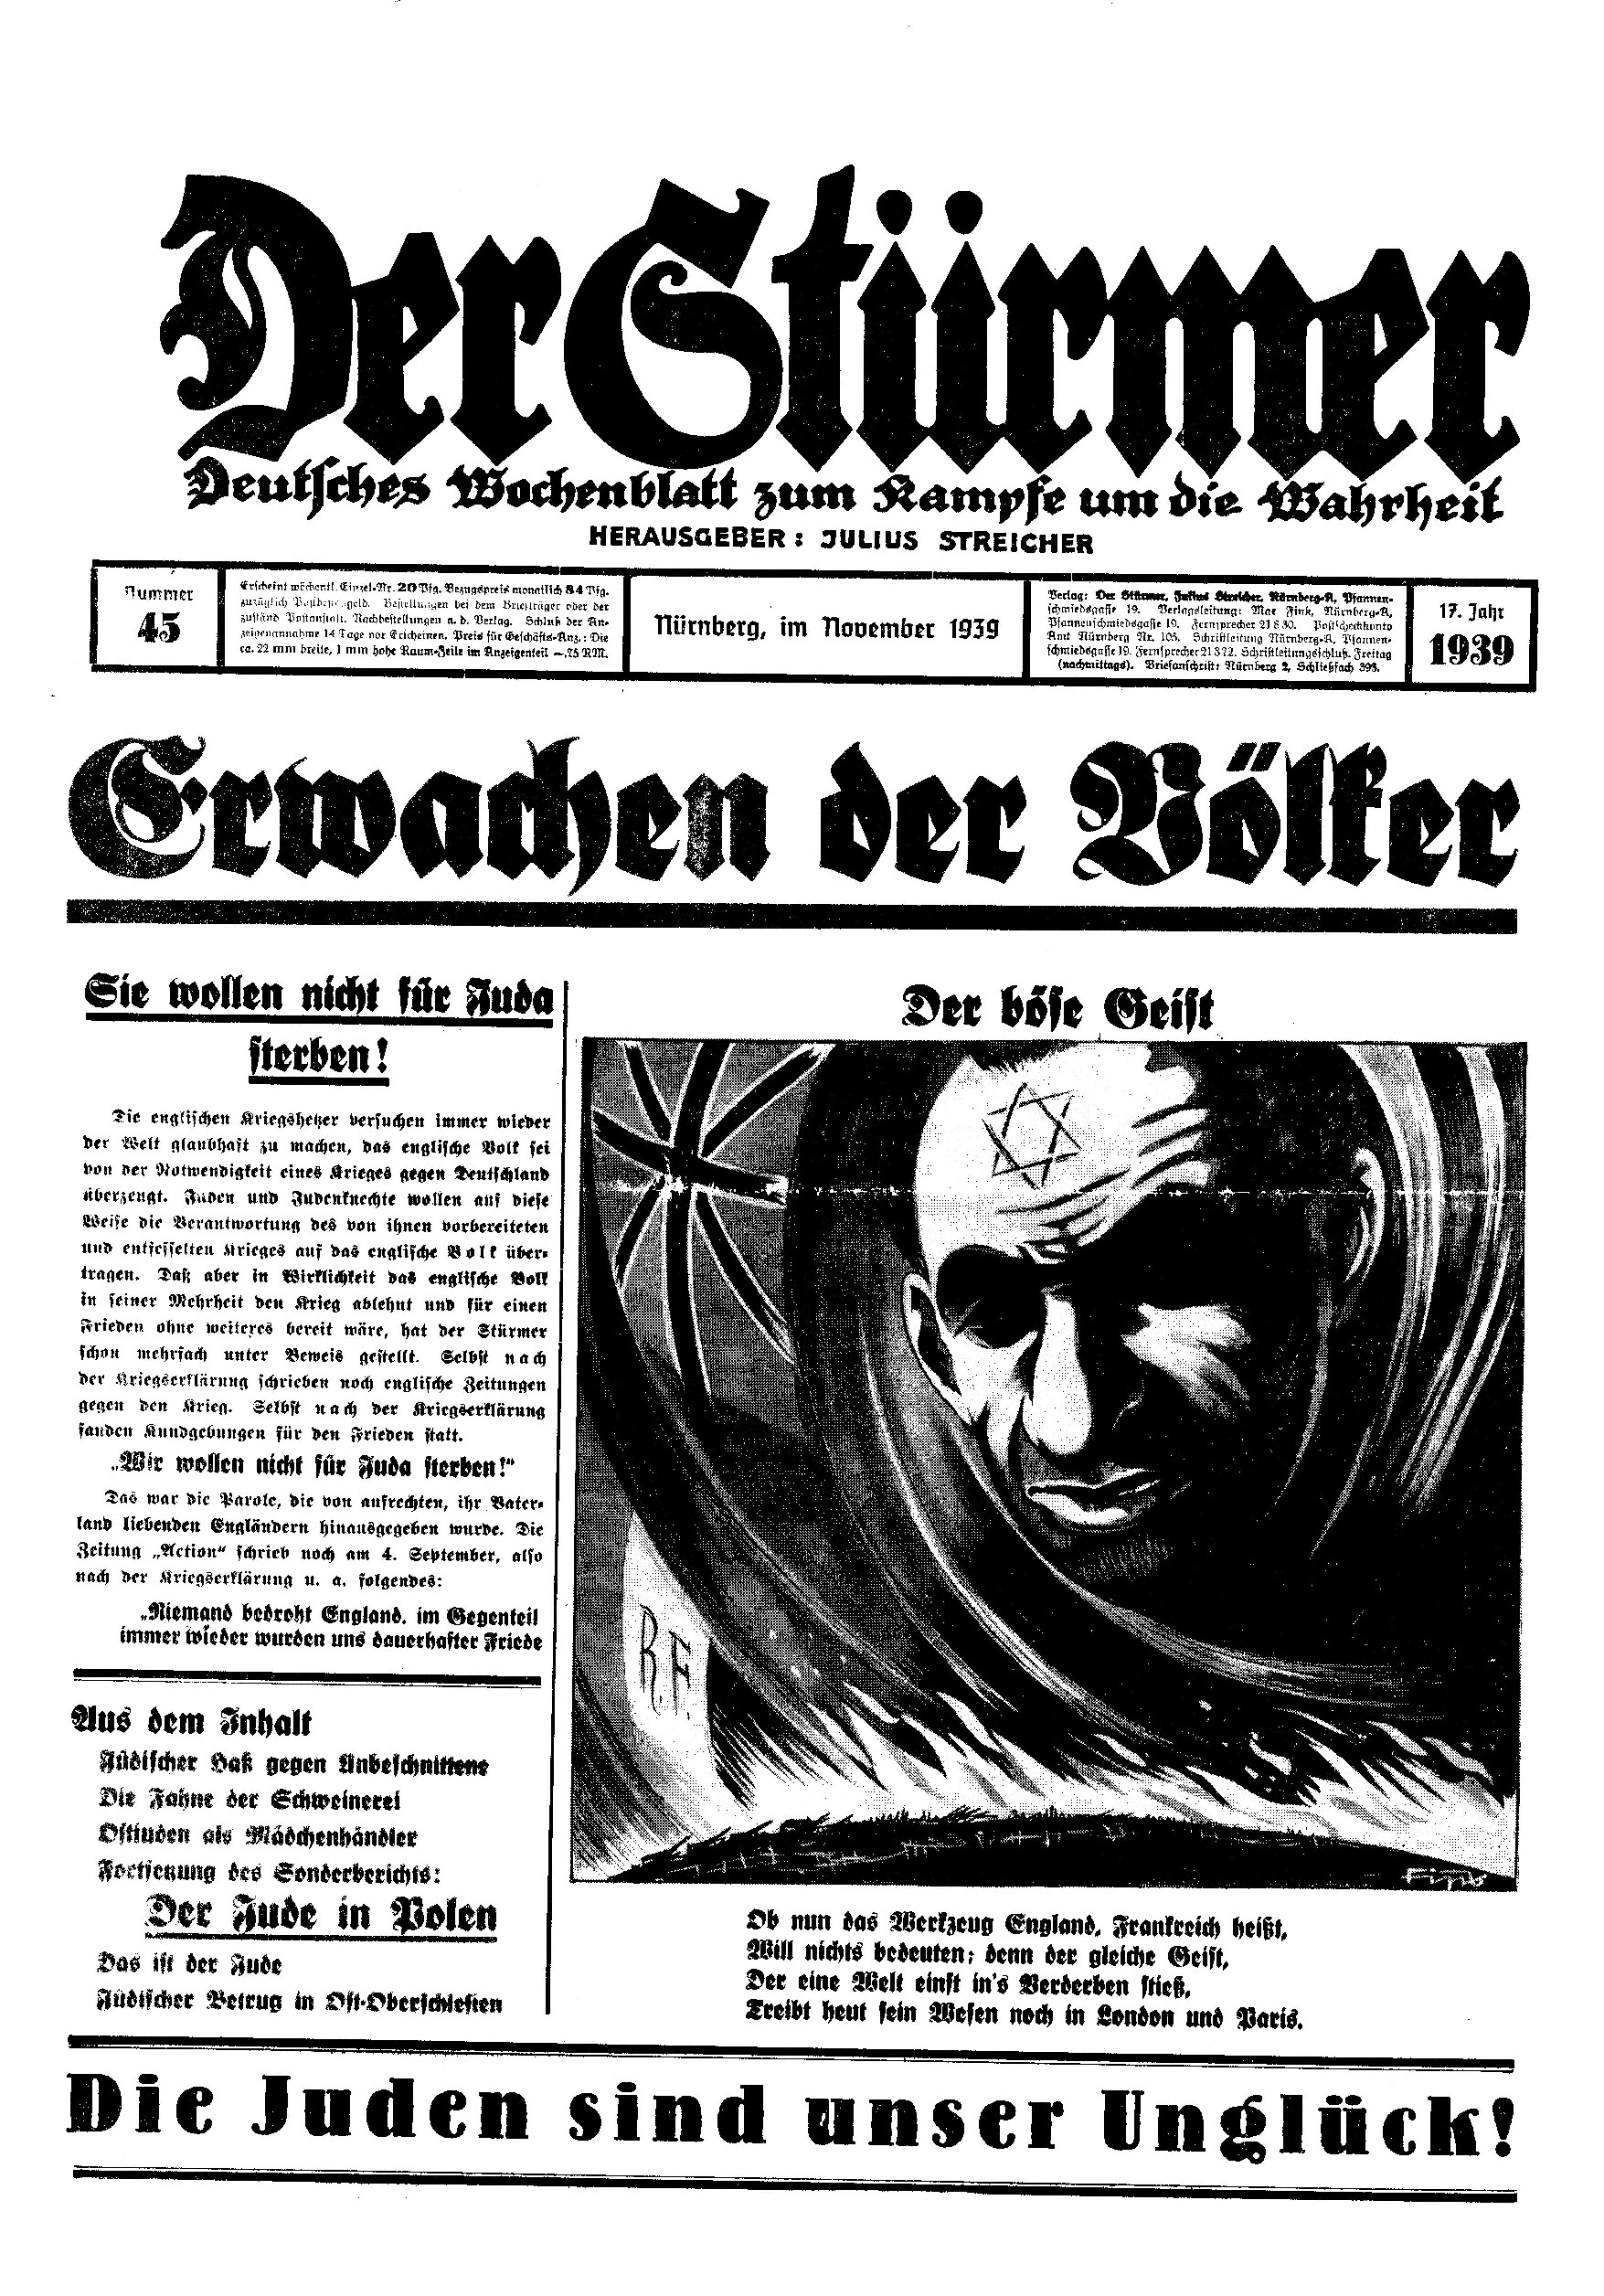 Der Stürmer - 1939 Nr. 45 - Erwachen der Völker